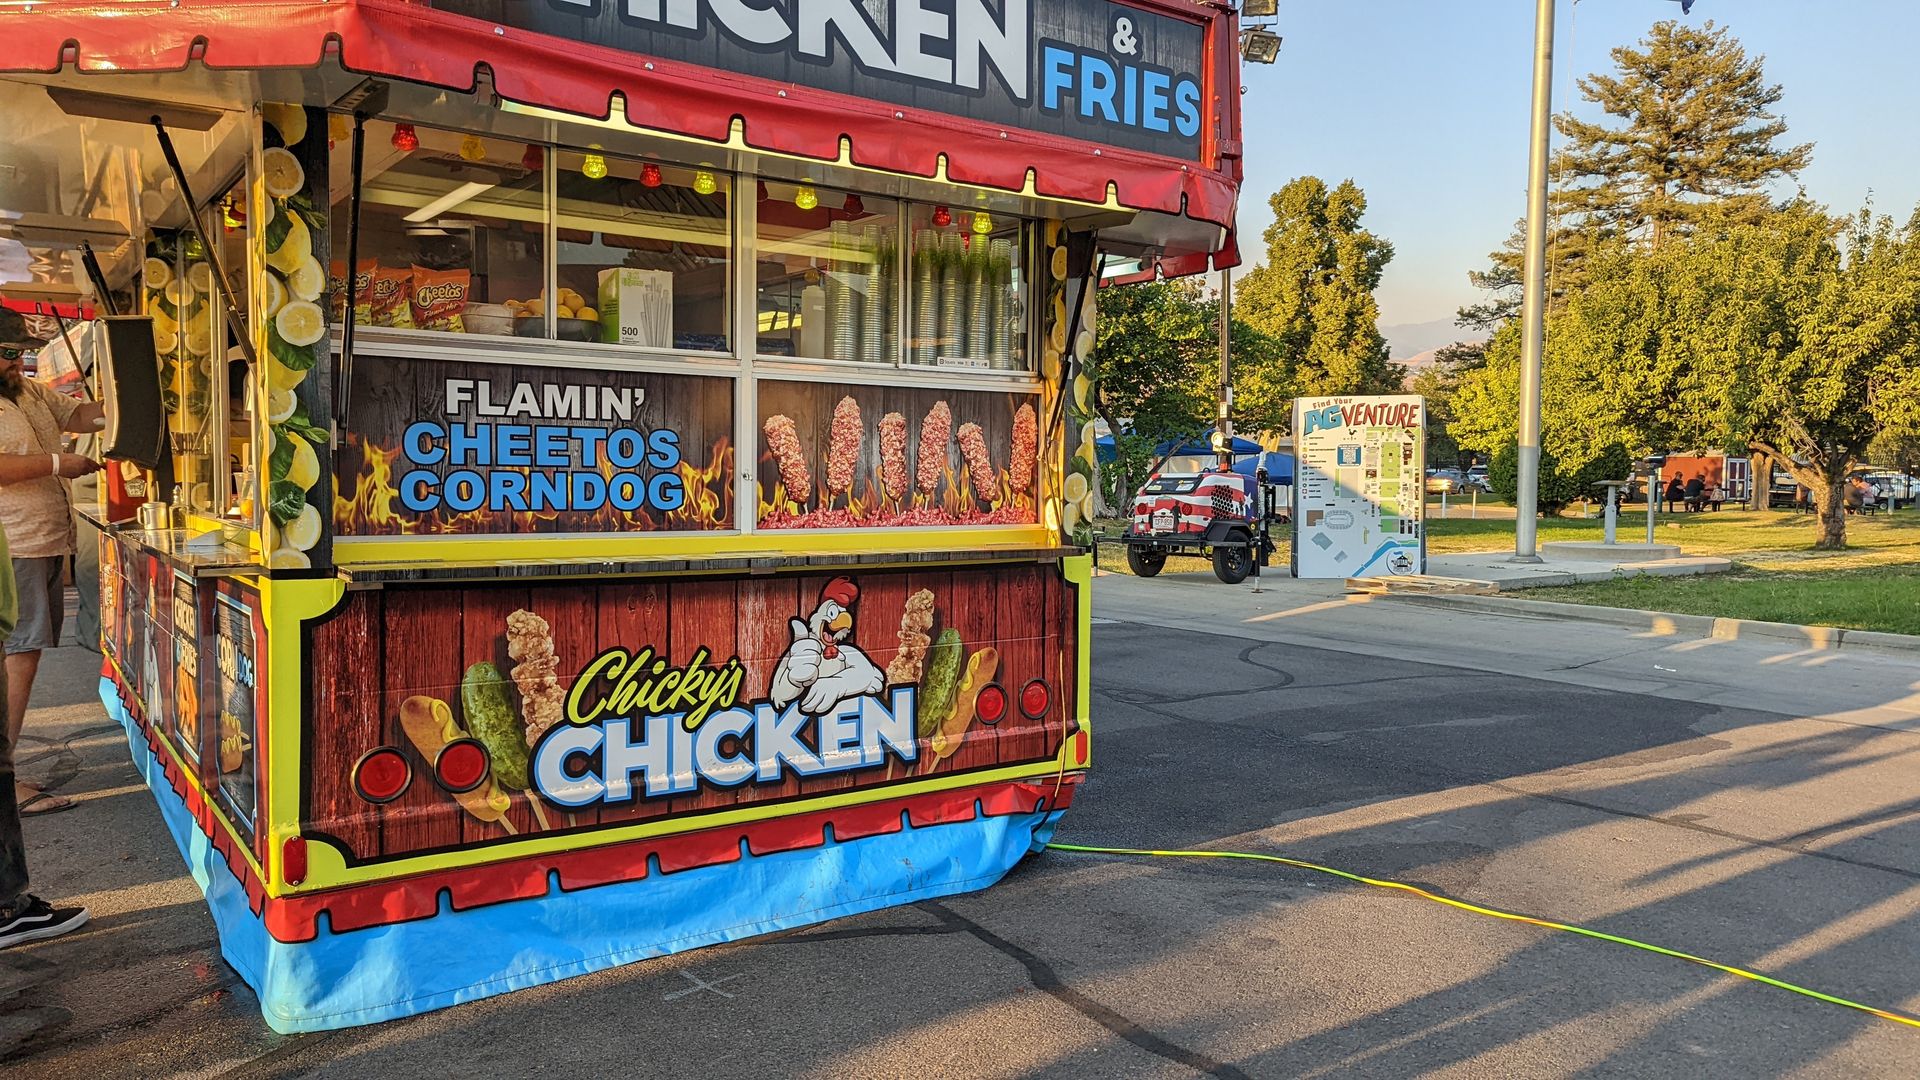 A carnival food vendor advertises Flamin' Cheetos Corndogs.